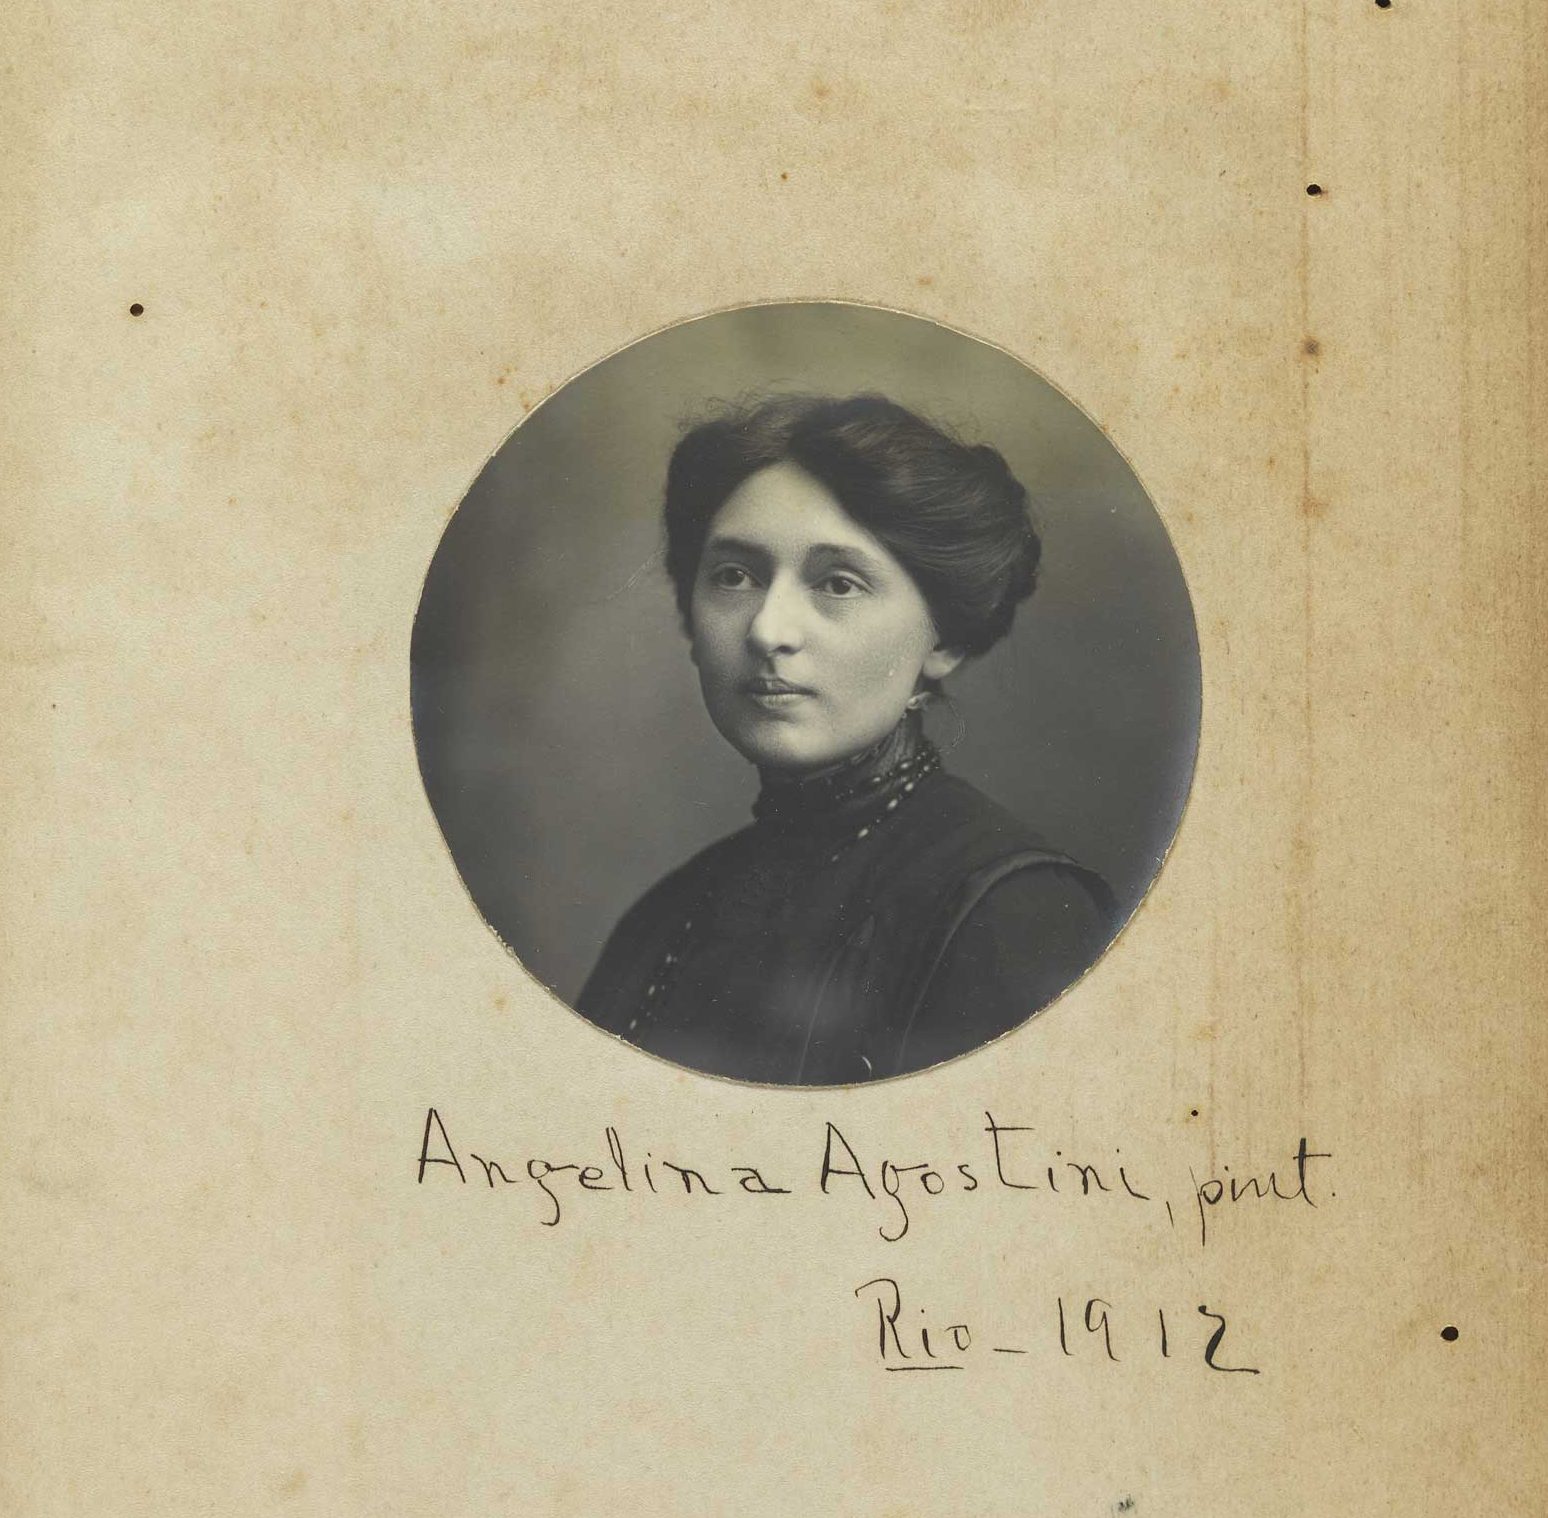 Angelina Agostini